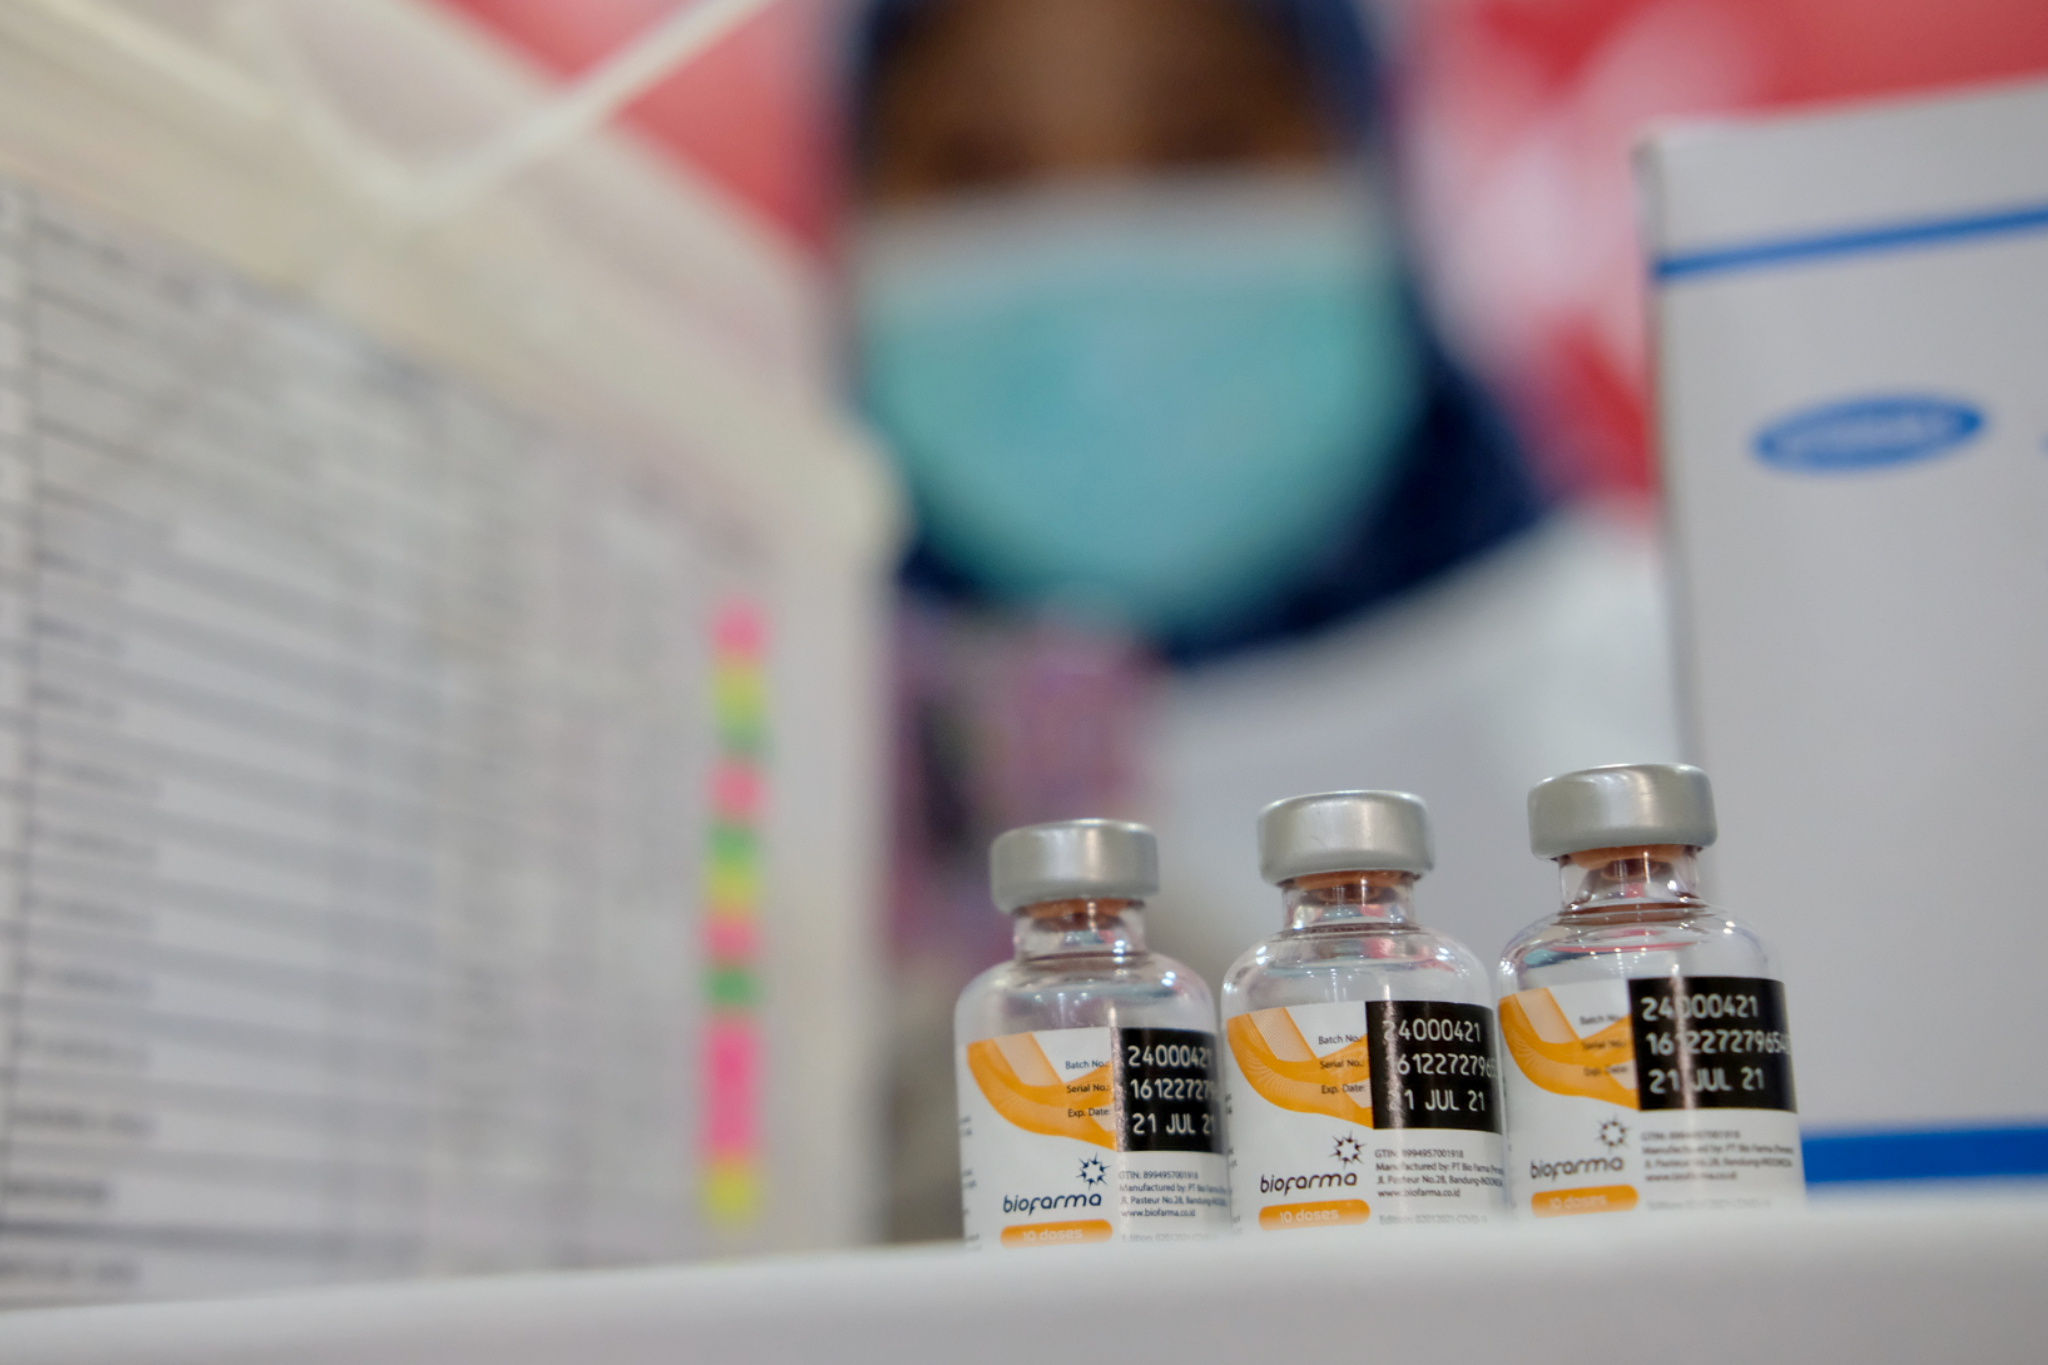 <p>Vaksin Covid-19 dimeja petugas nakes saat pemberian vaksinasi tahap II untuk tenaga pendidik, guru, dan dosen di SMA Negeri 70 Jakarta, Rabu, 24 Februari 2021. Foto: Ismail Pohan/TrenAsia</p>
